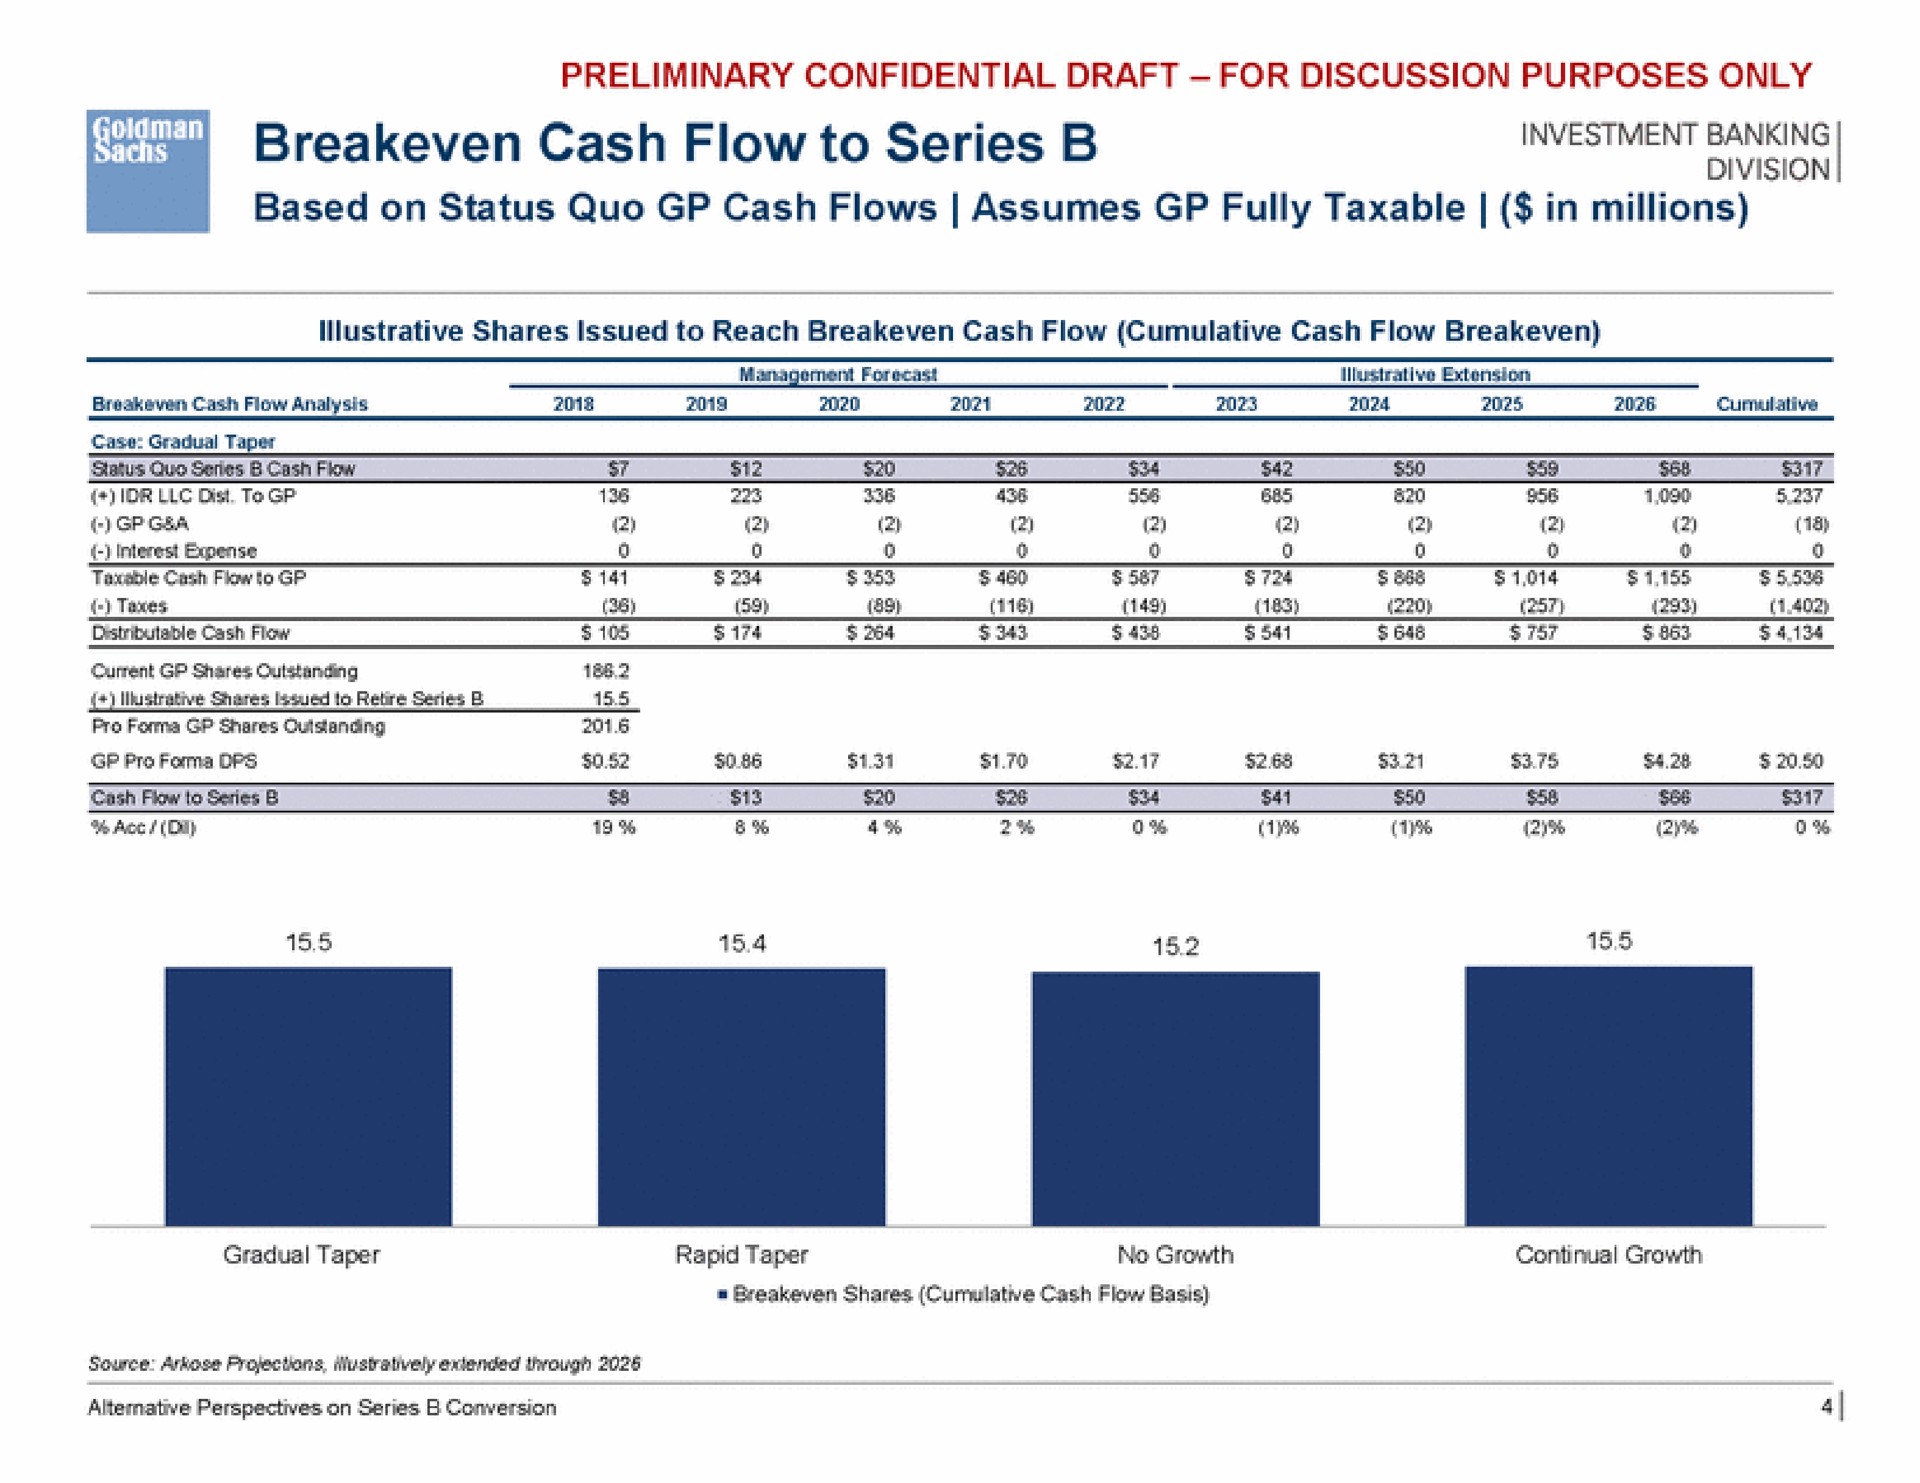 cash flow to series | Goldman Sachs